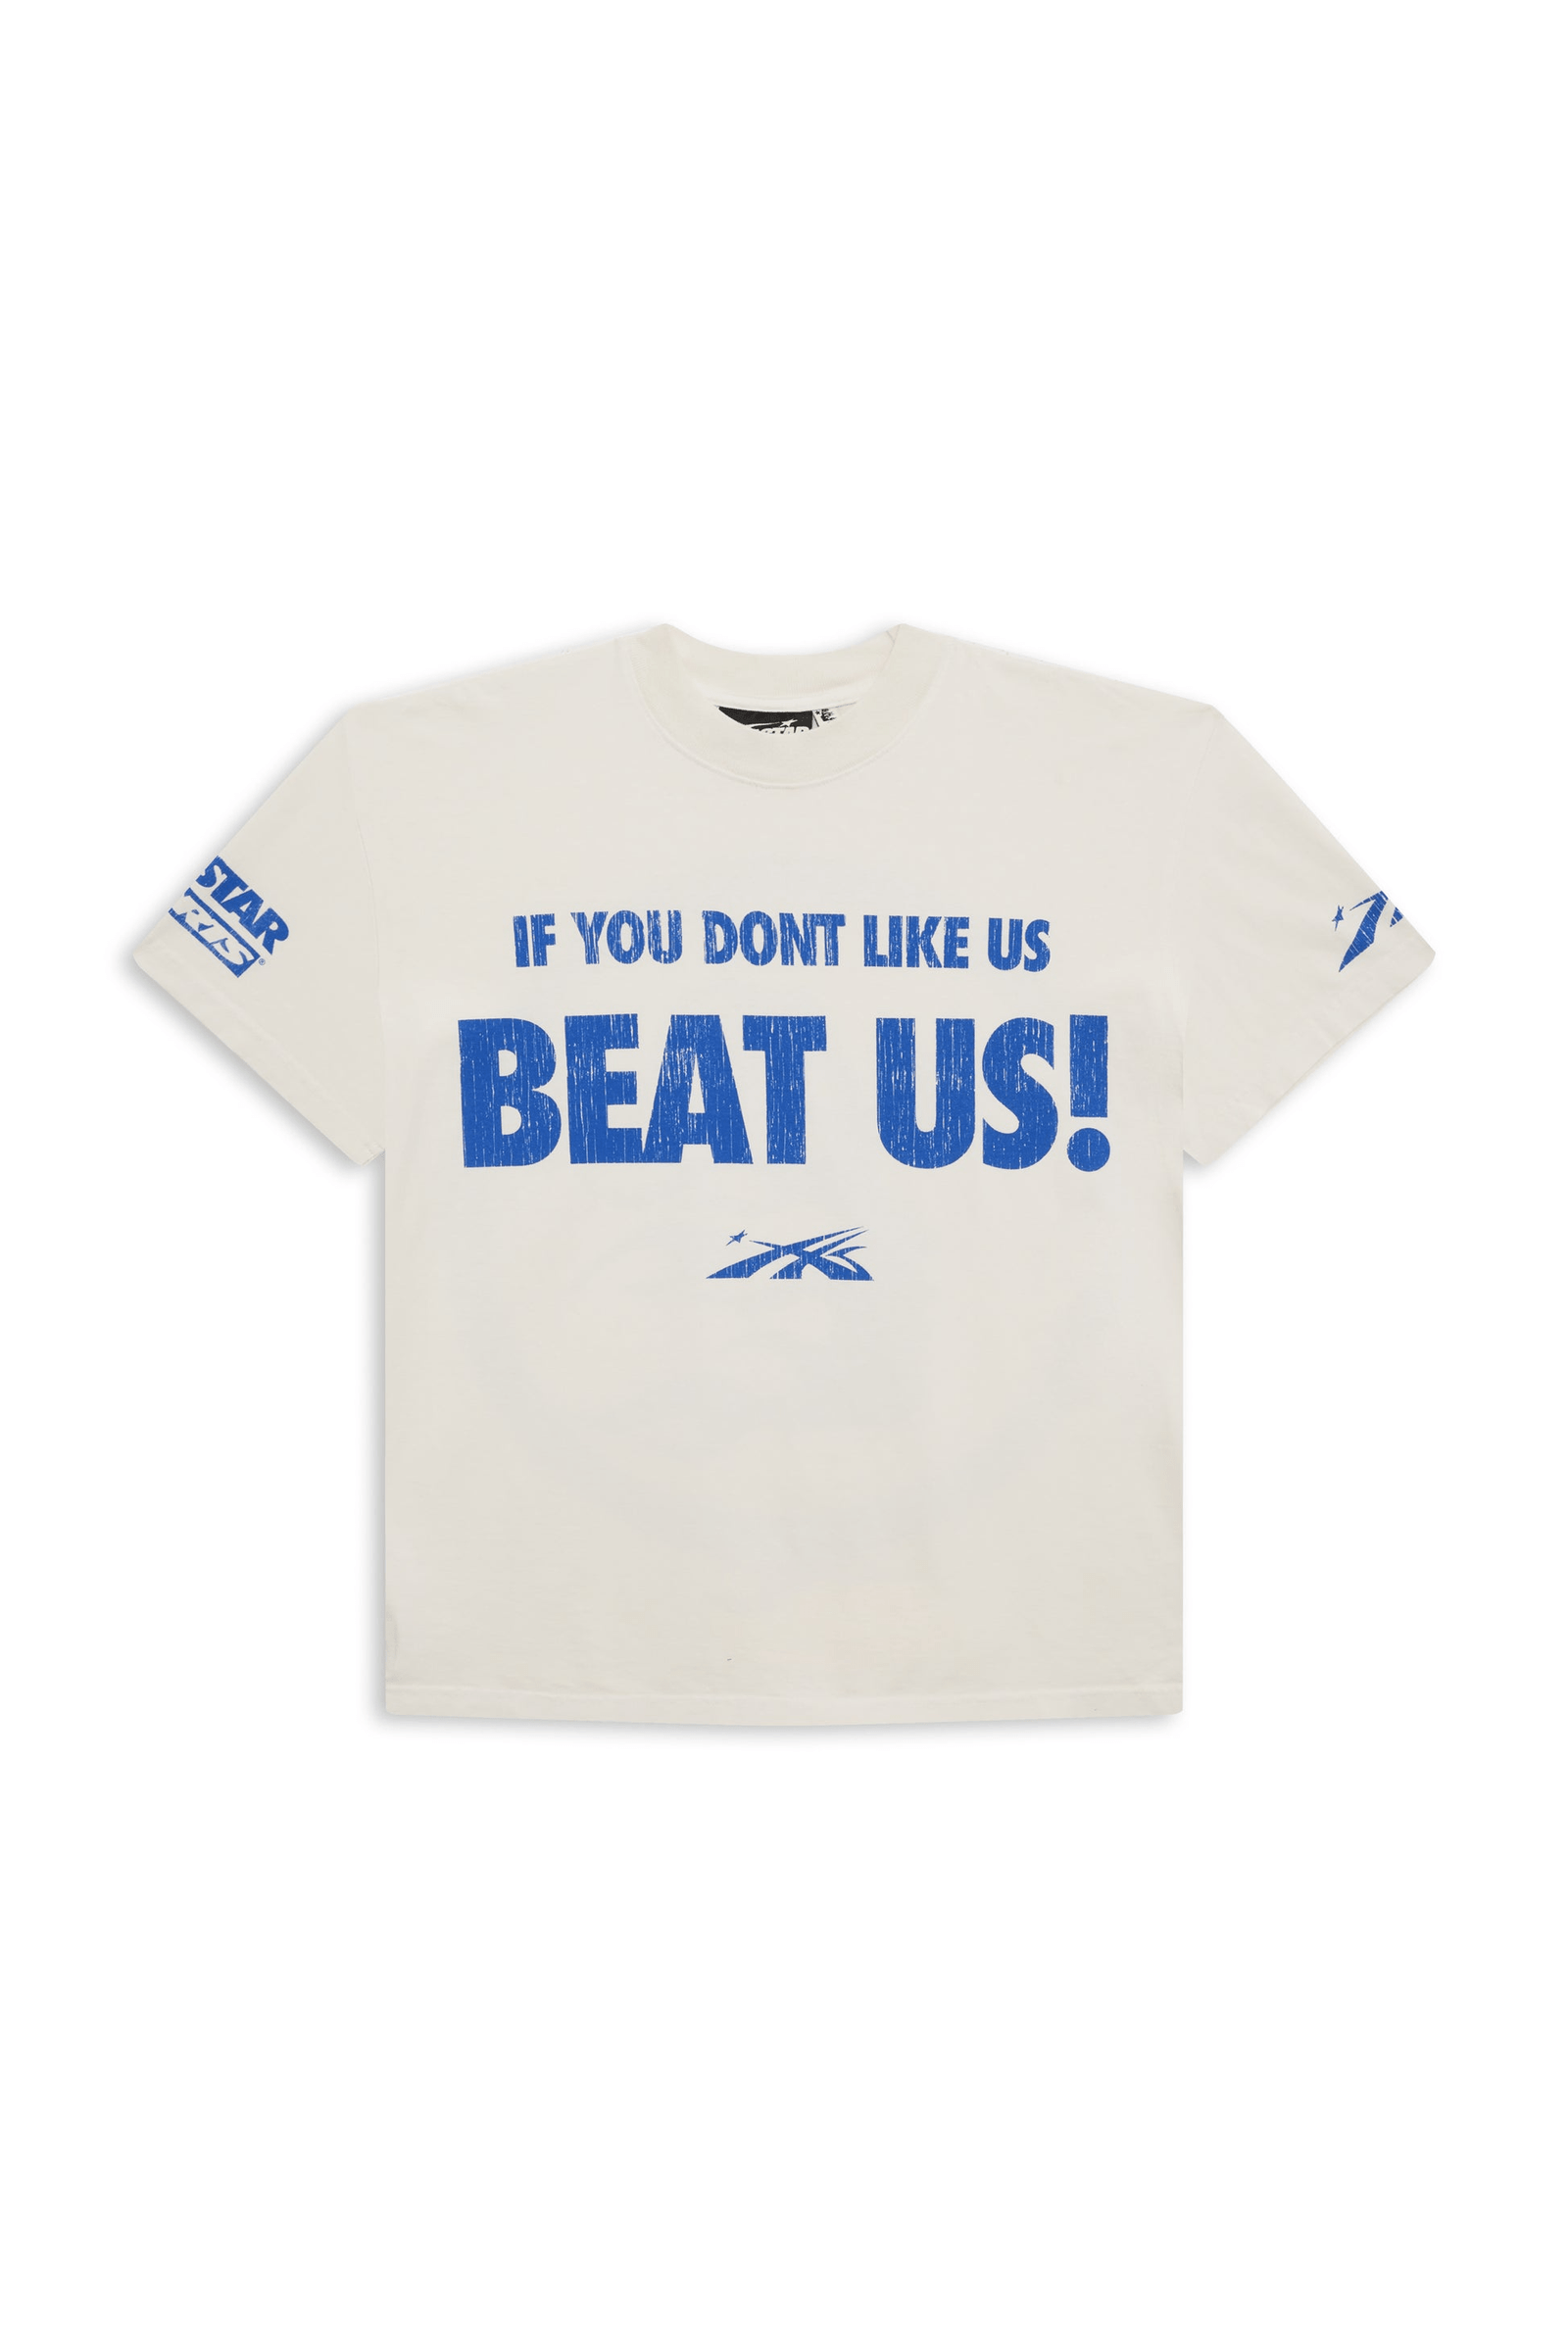 Hellstar Beat Us! T-Shirt White/Blue